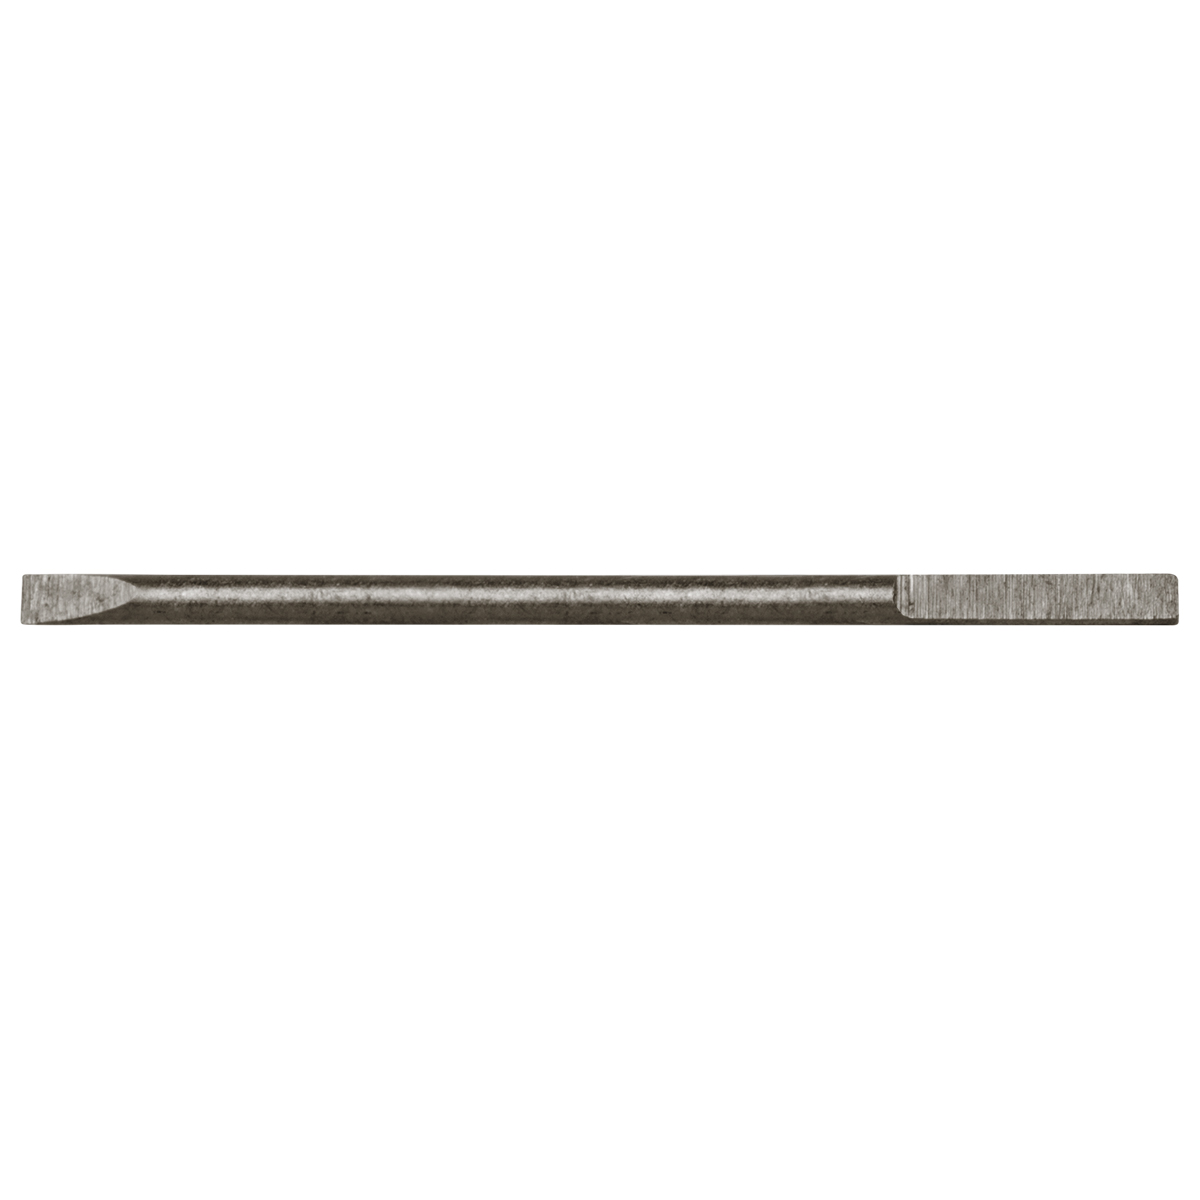 4 Blades for Ergo screwdriver, slot, 0,60 mm, standard taper, green, stainless steel